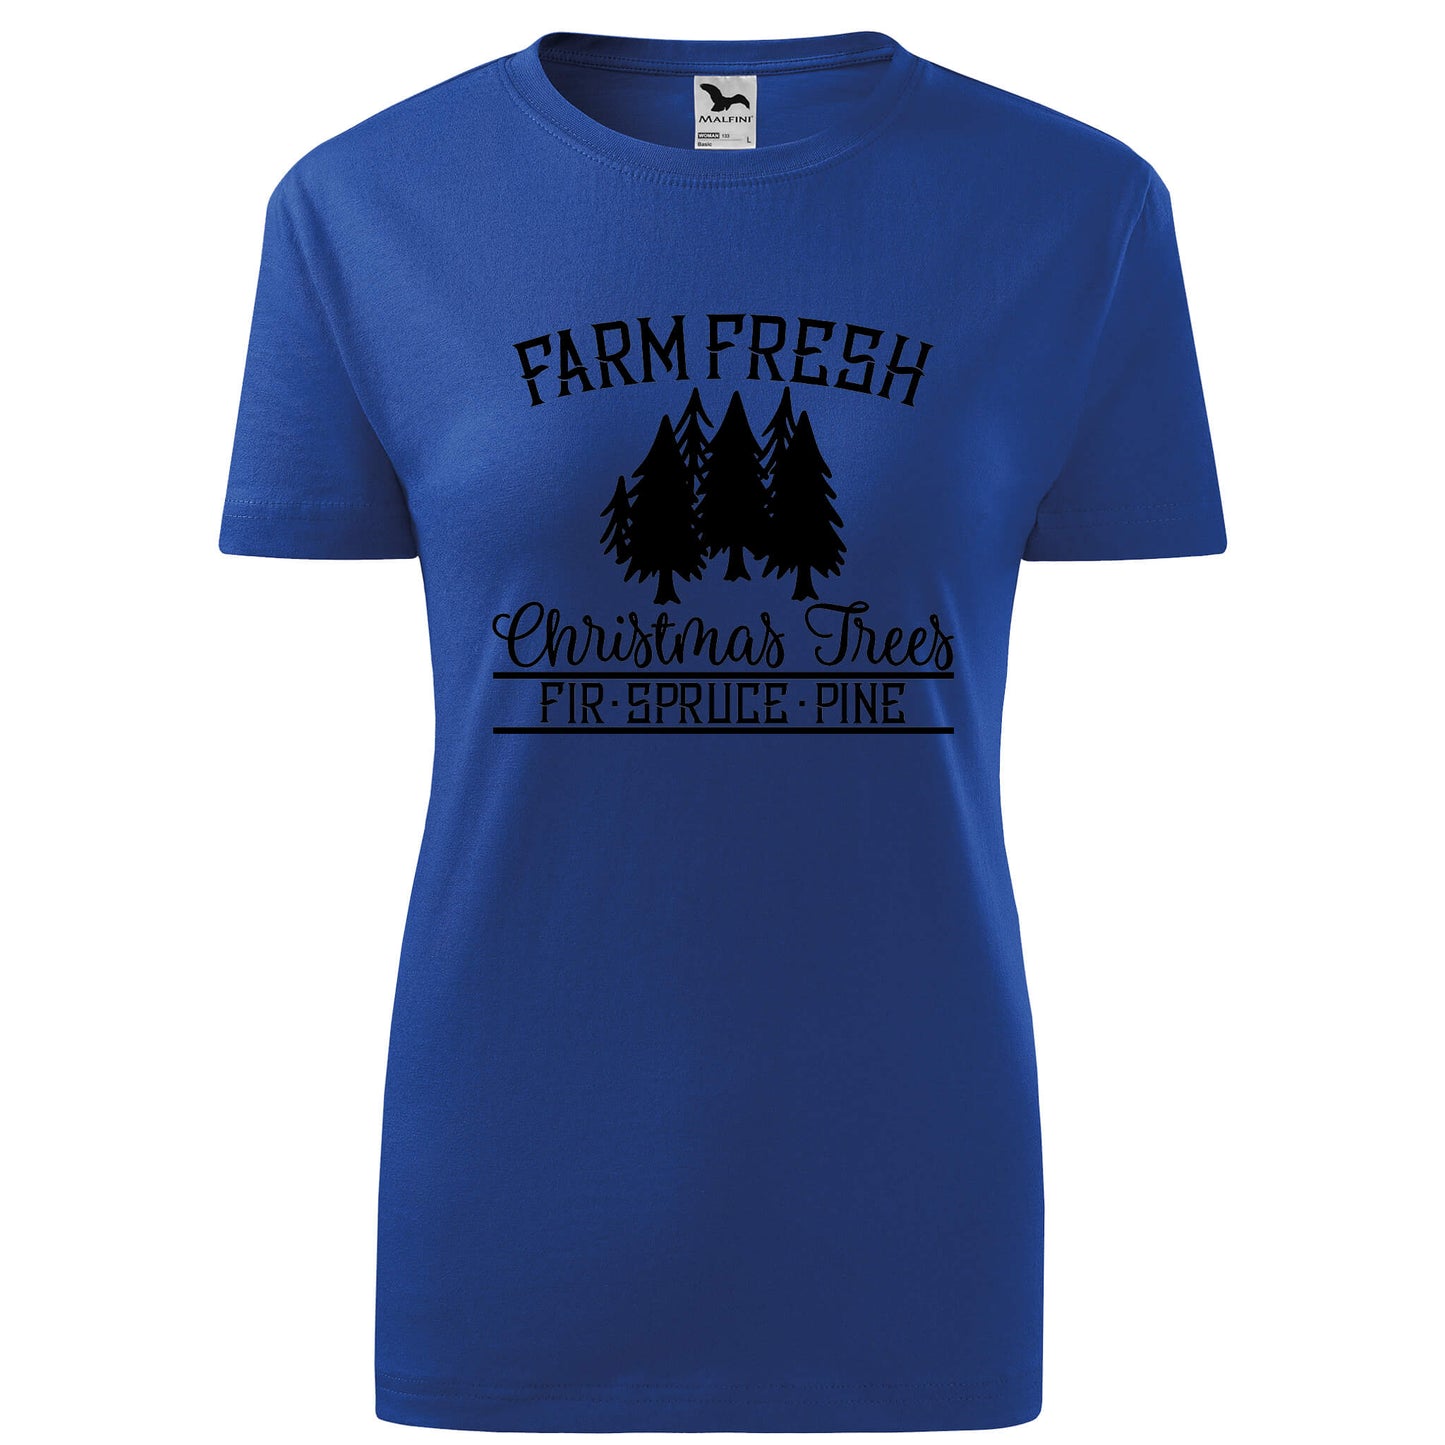 Farm fresh christmas trees t-shirt - rvdesignprint